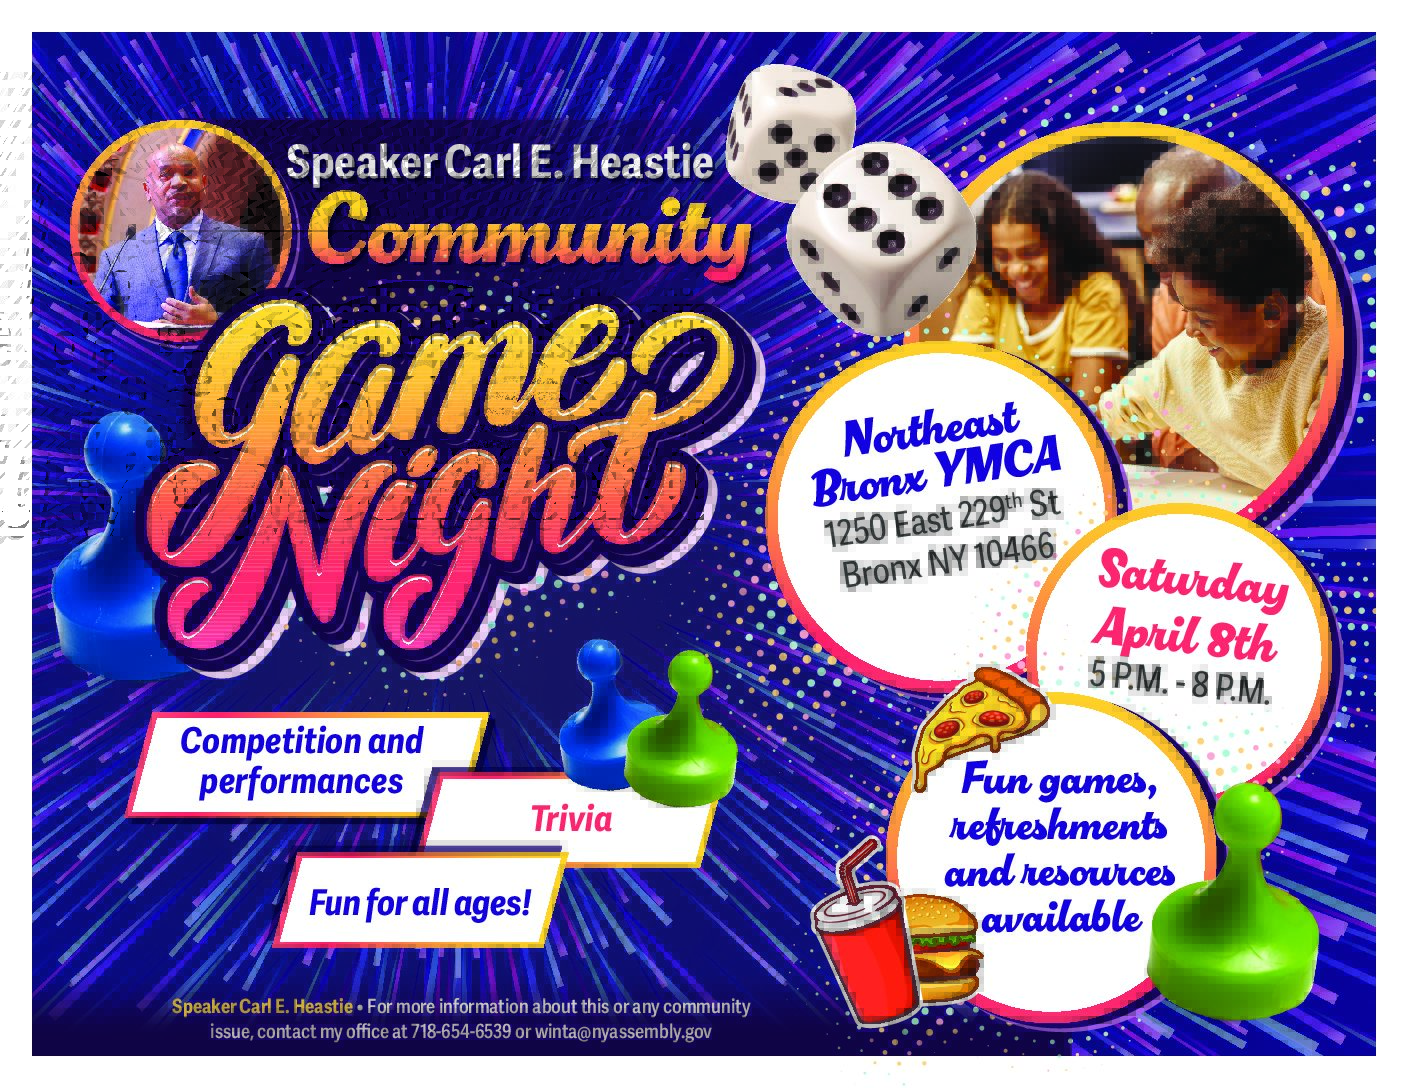 Speaker Carl E. Heastie’s Community Game Night